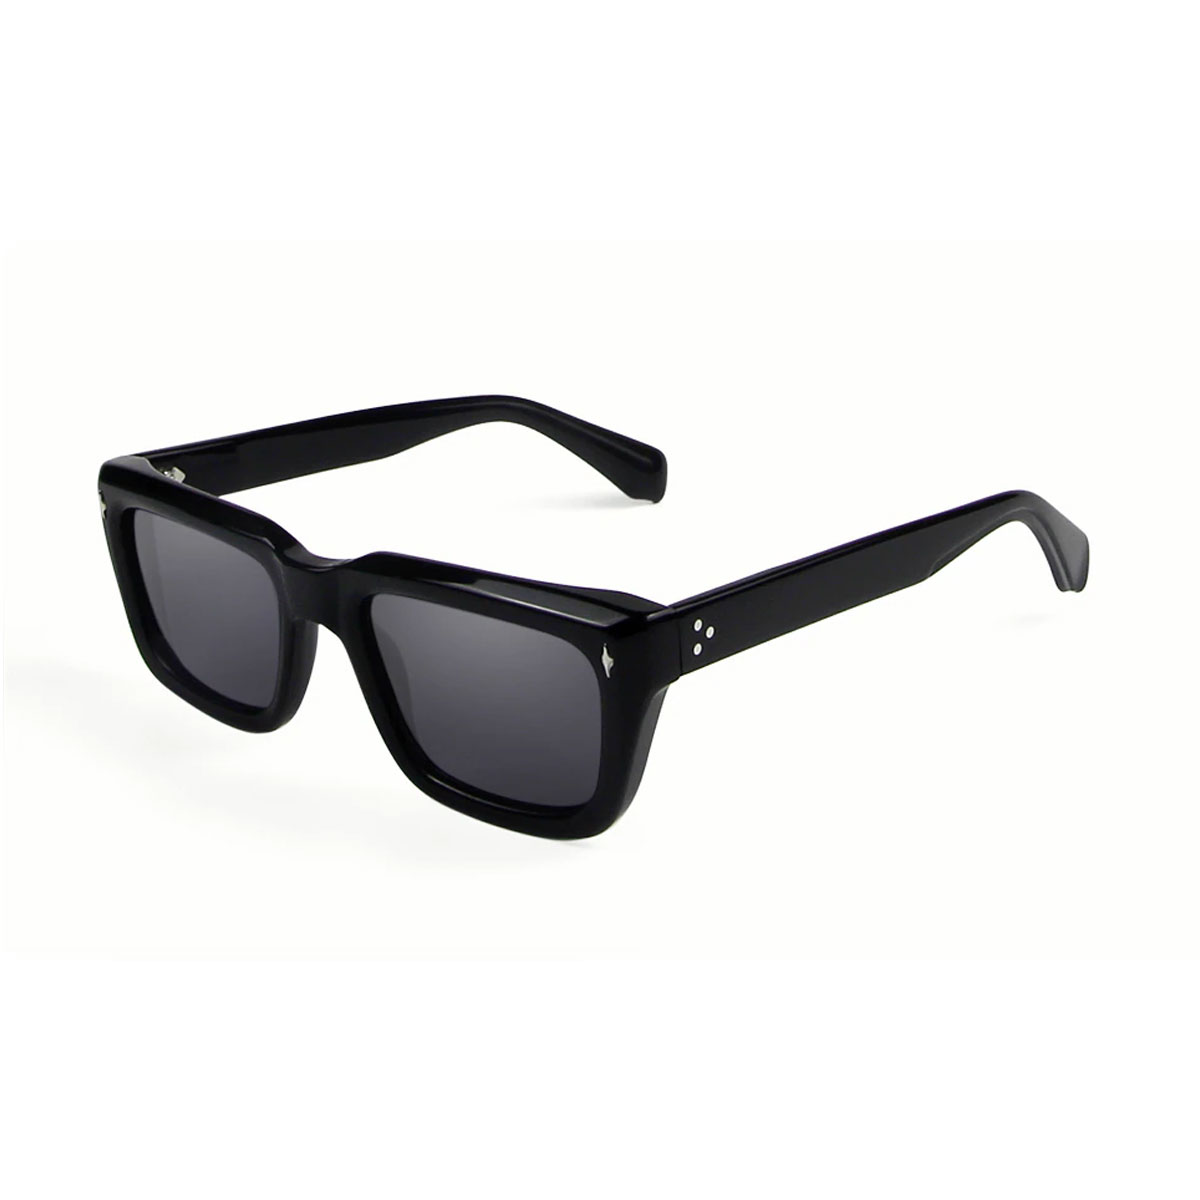 Designer Black Acetate Sunglasses For Men And Women High Quality Classic  Retro Luxury Brand Eyewear With Box From Liulin6081, $54.93